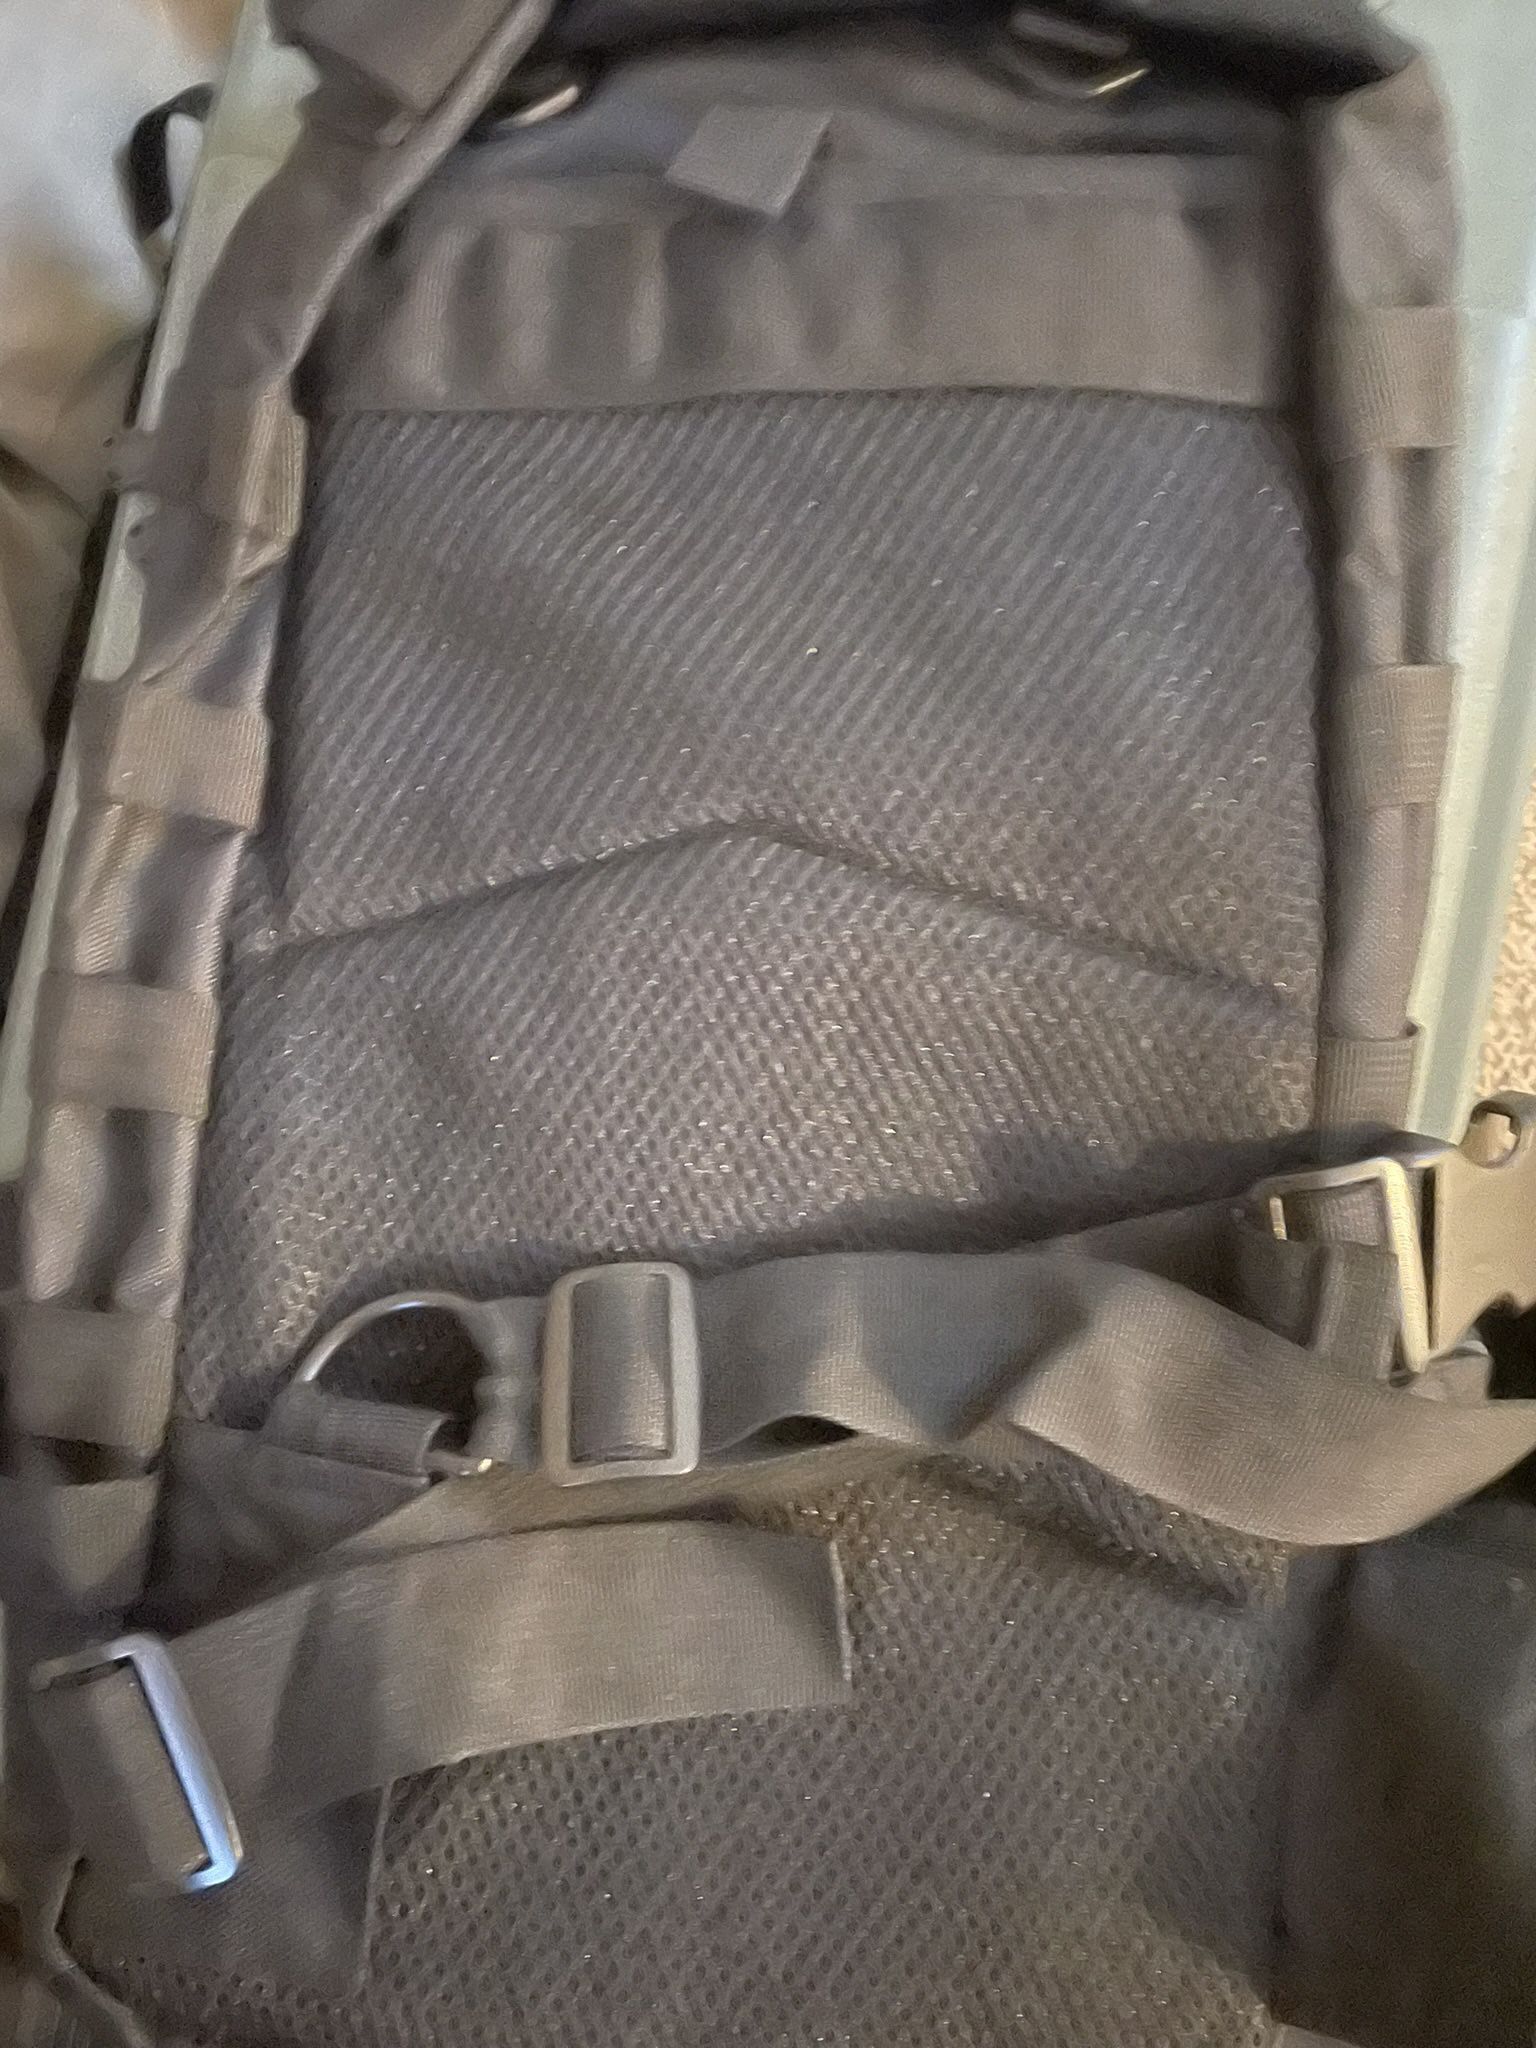 Black military grade backpack 